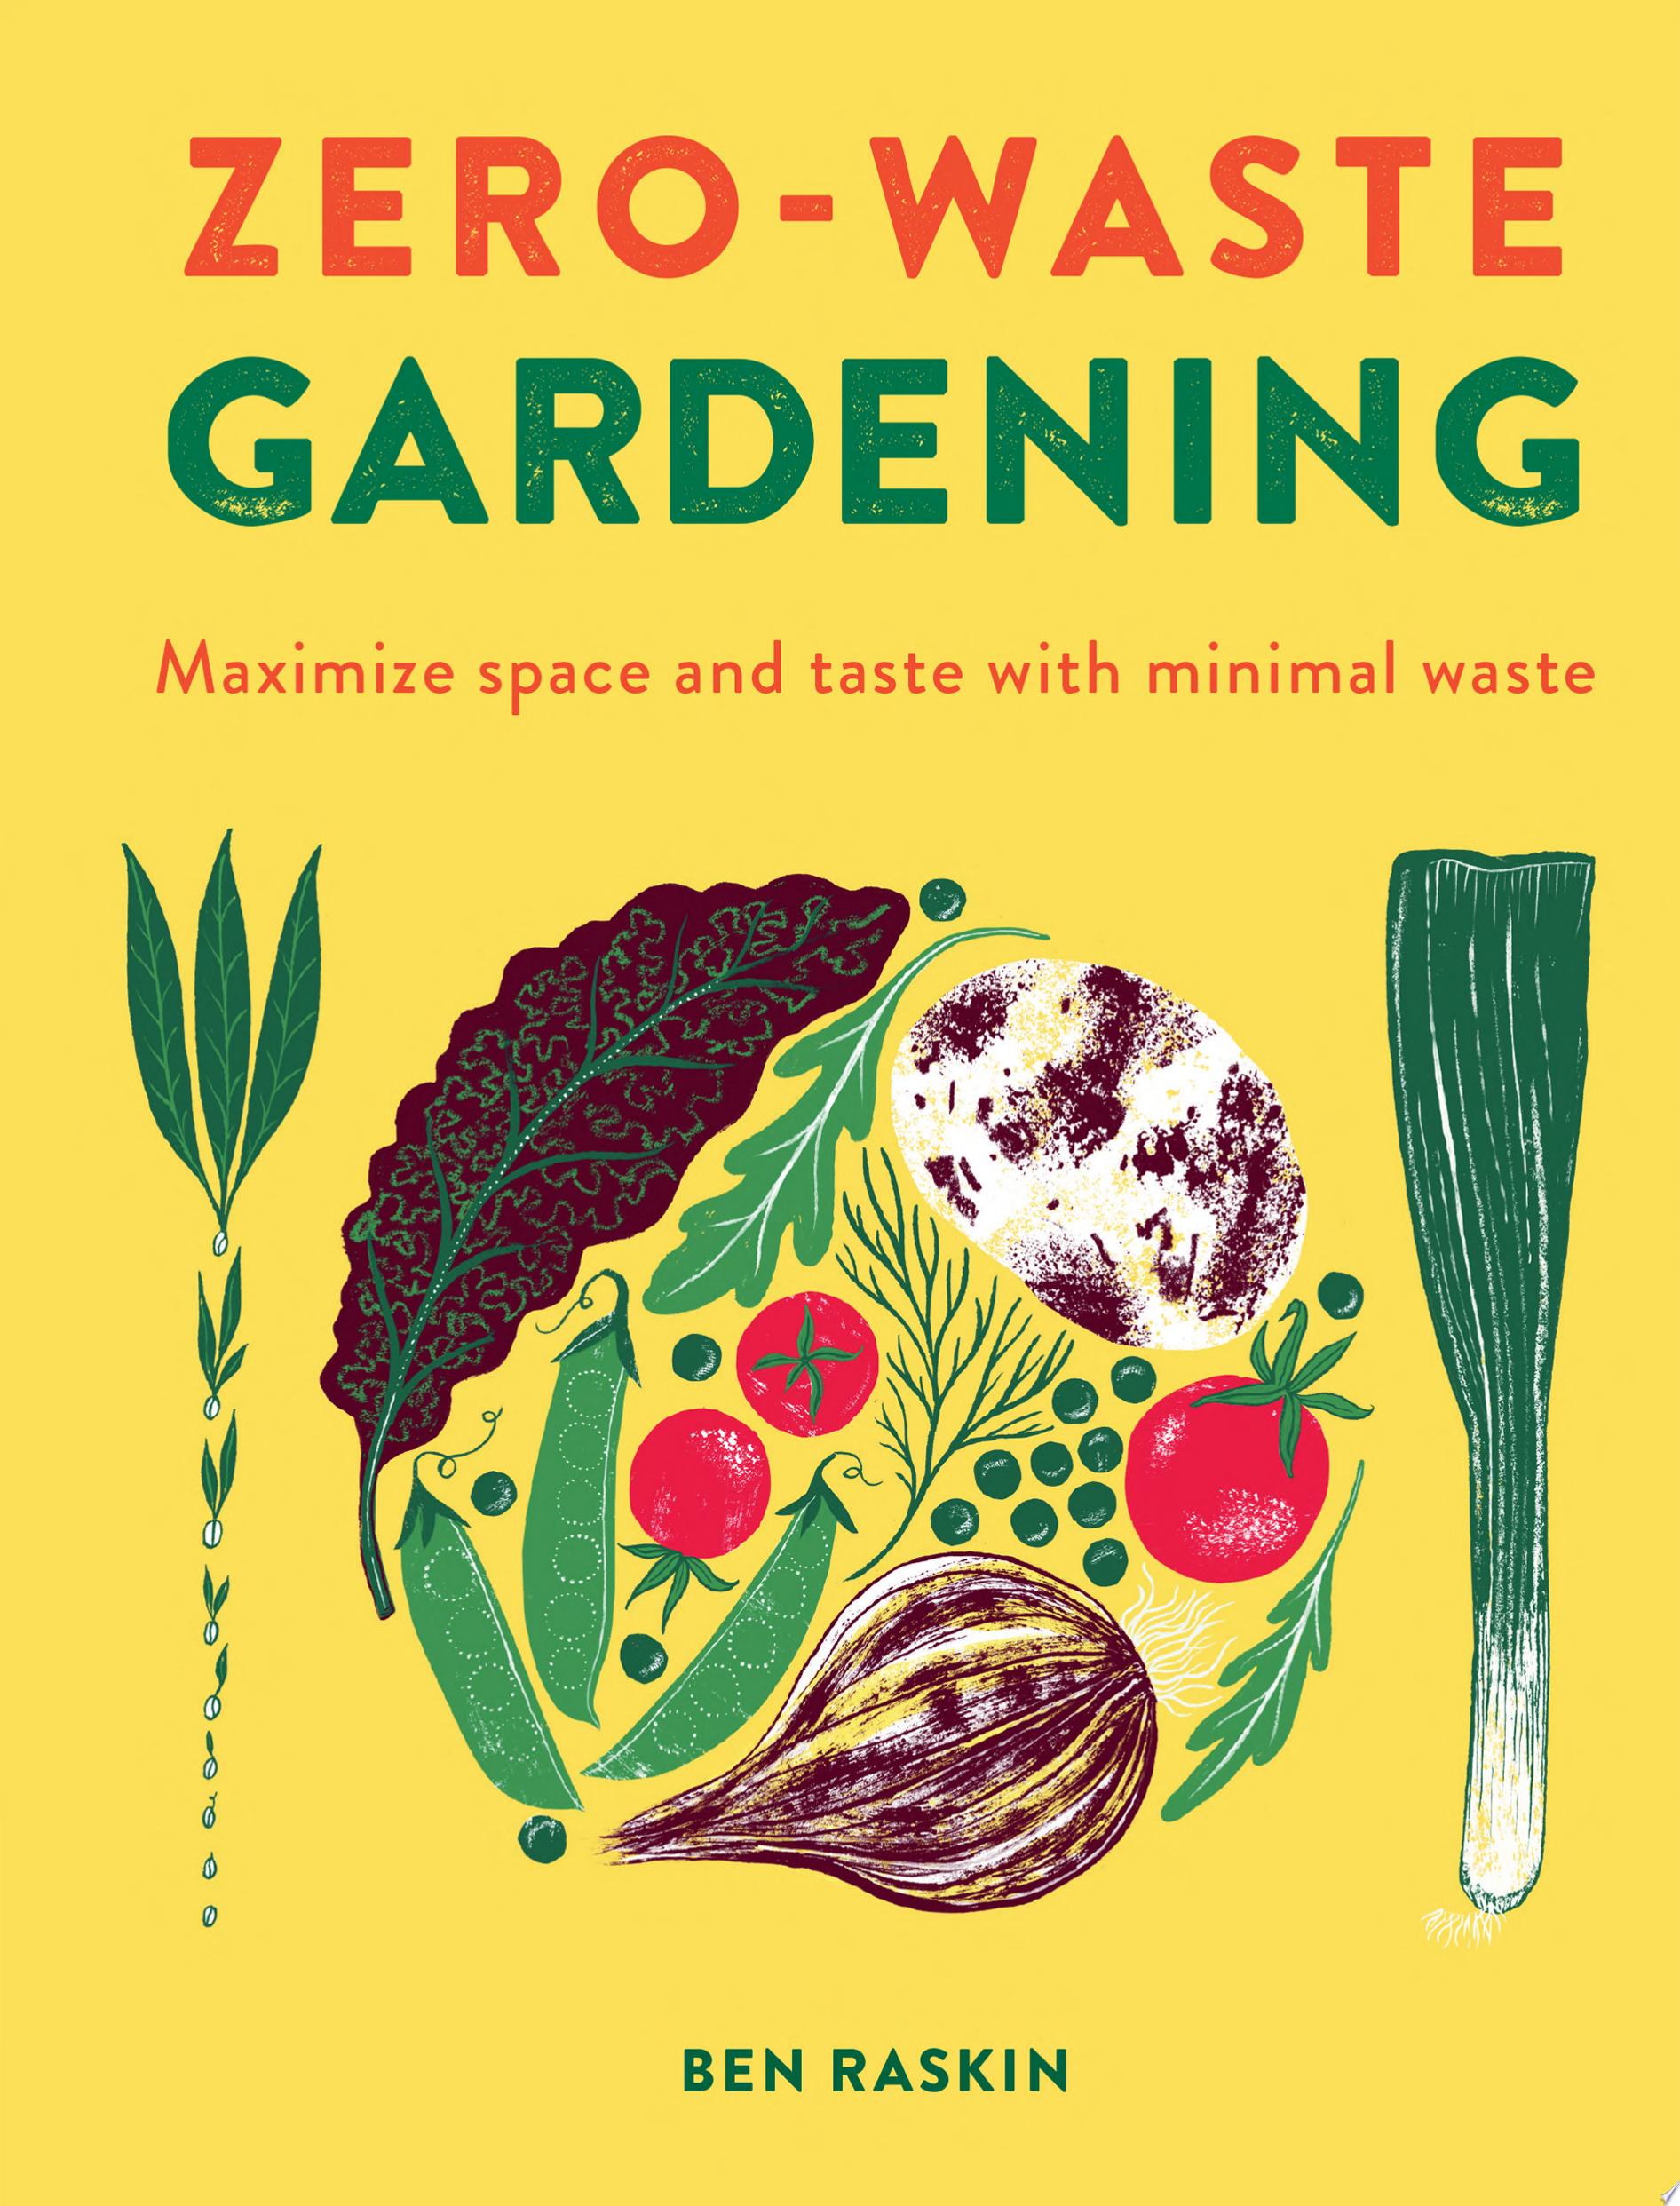 Image for "Zero Waste Gardening"